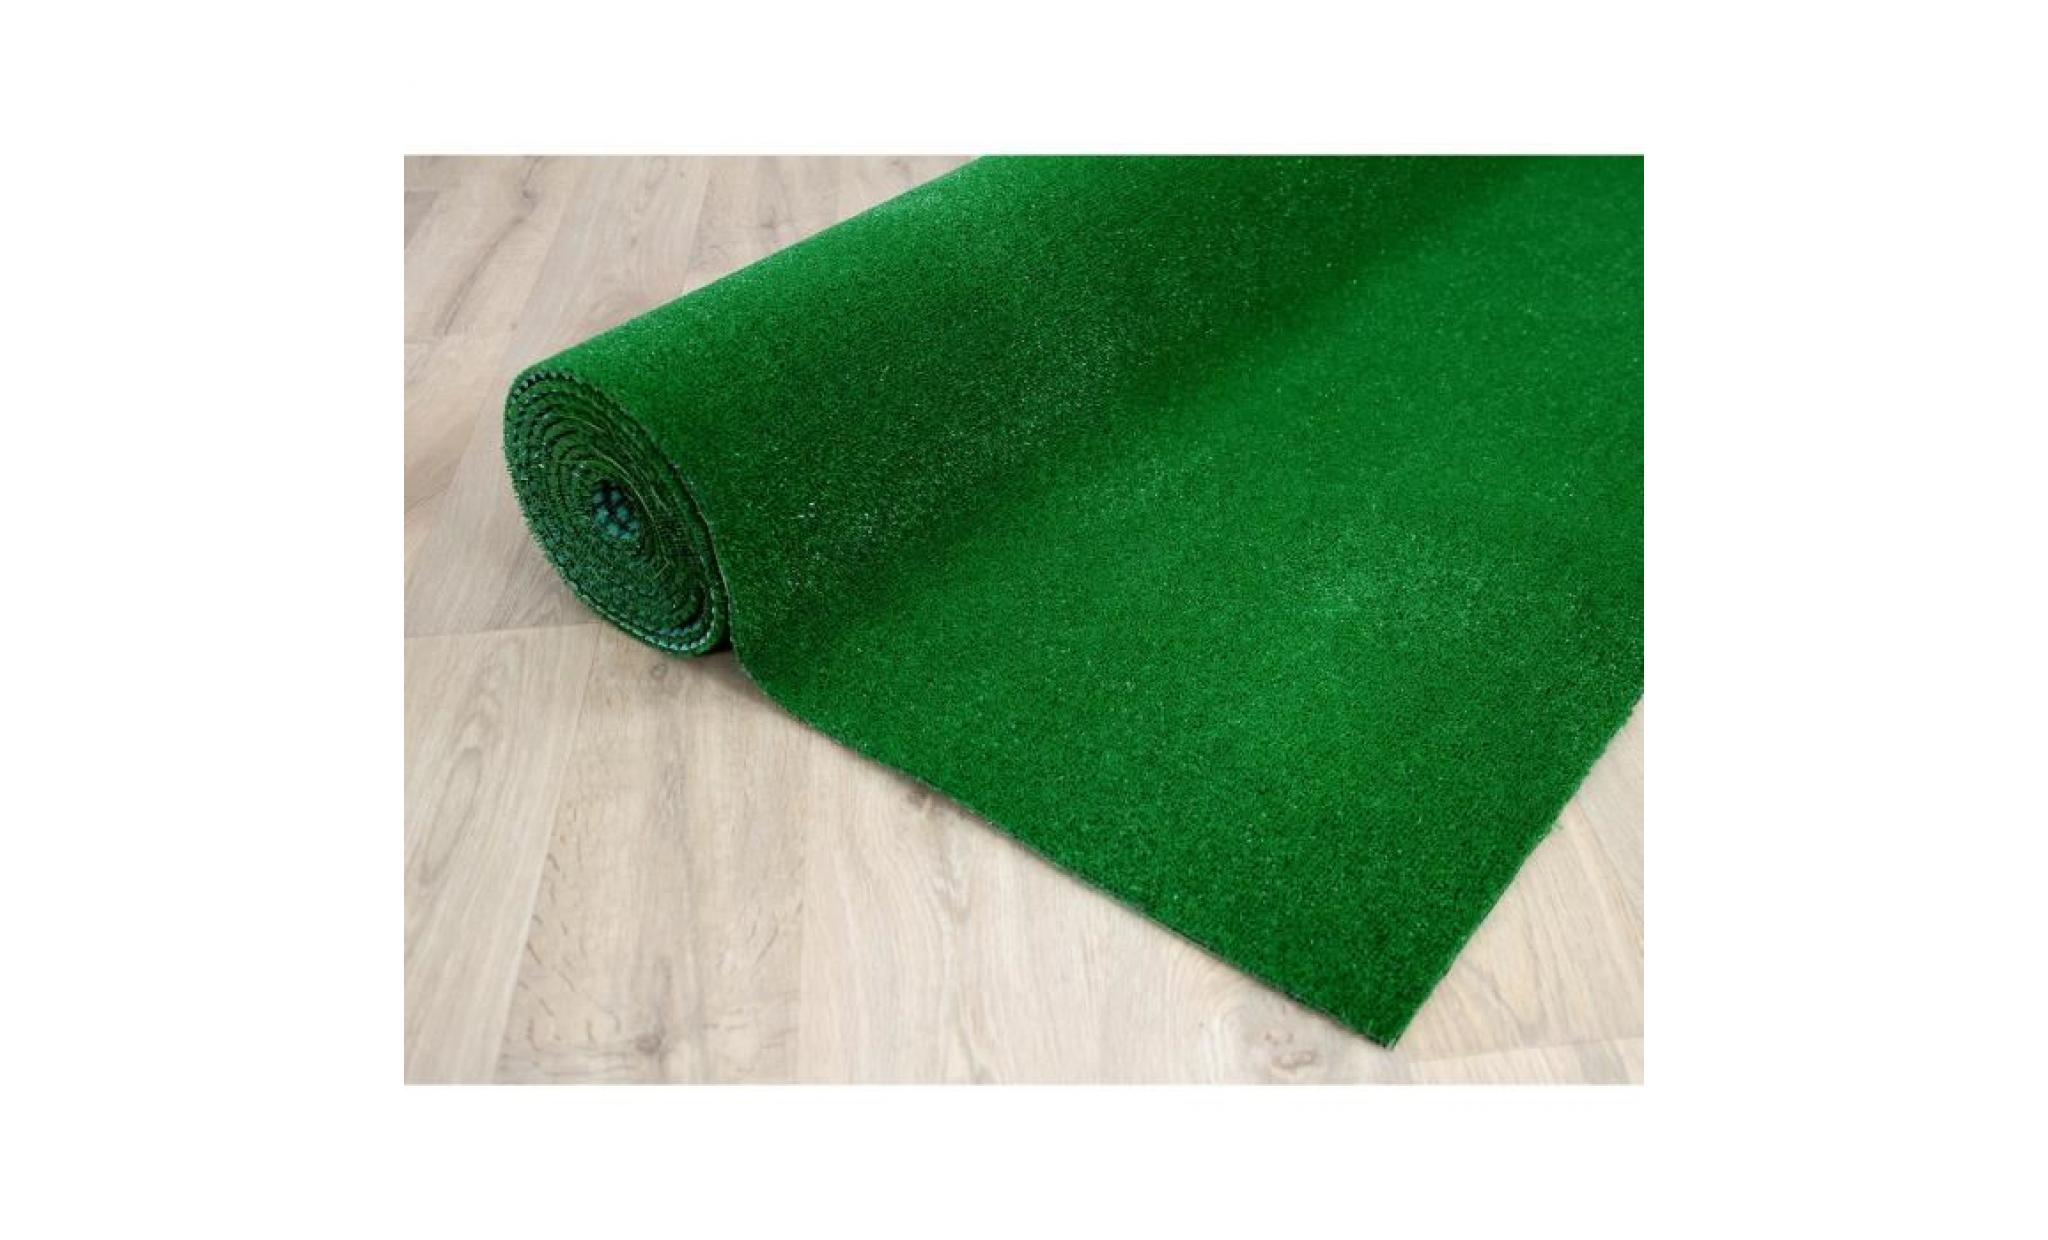 york   tapis type gazon artificiel avec nubs – pour jardin, terrasse, balcon   vert   [200x250 cm]